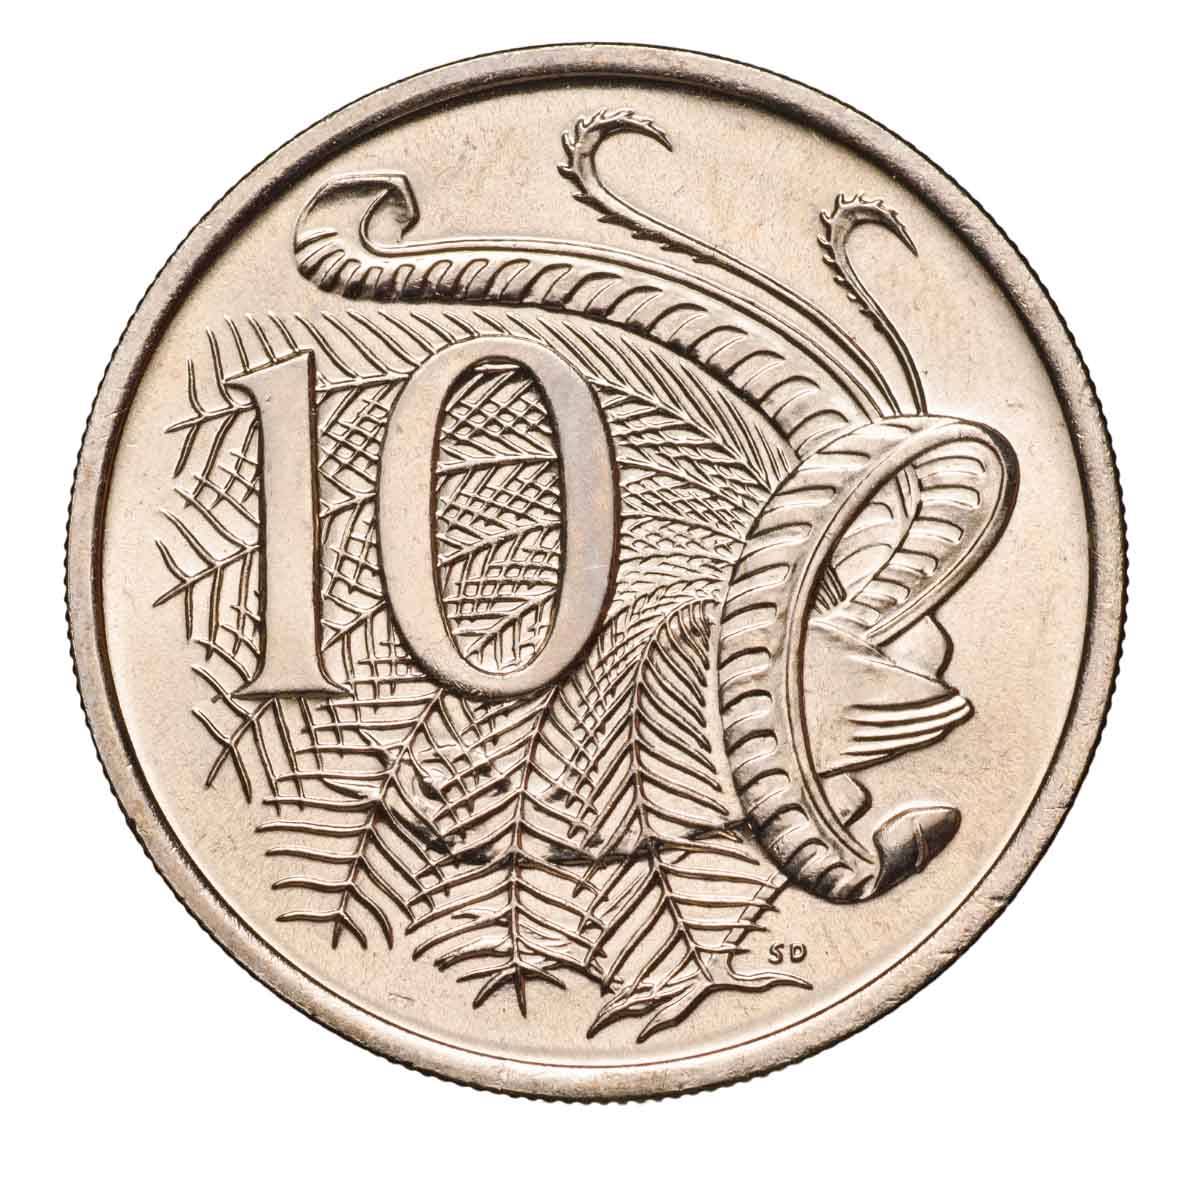 RAM 1980 10c Mint Roll (40 Uncirculated Coins)